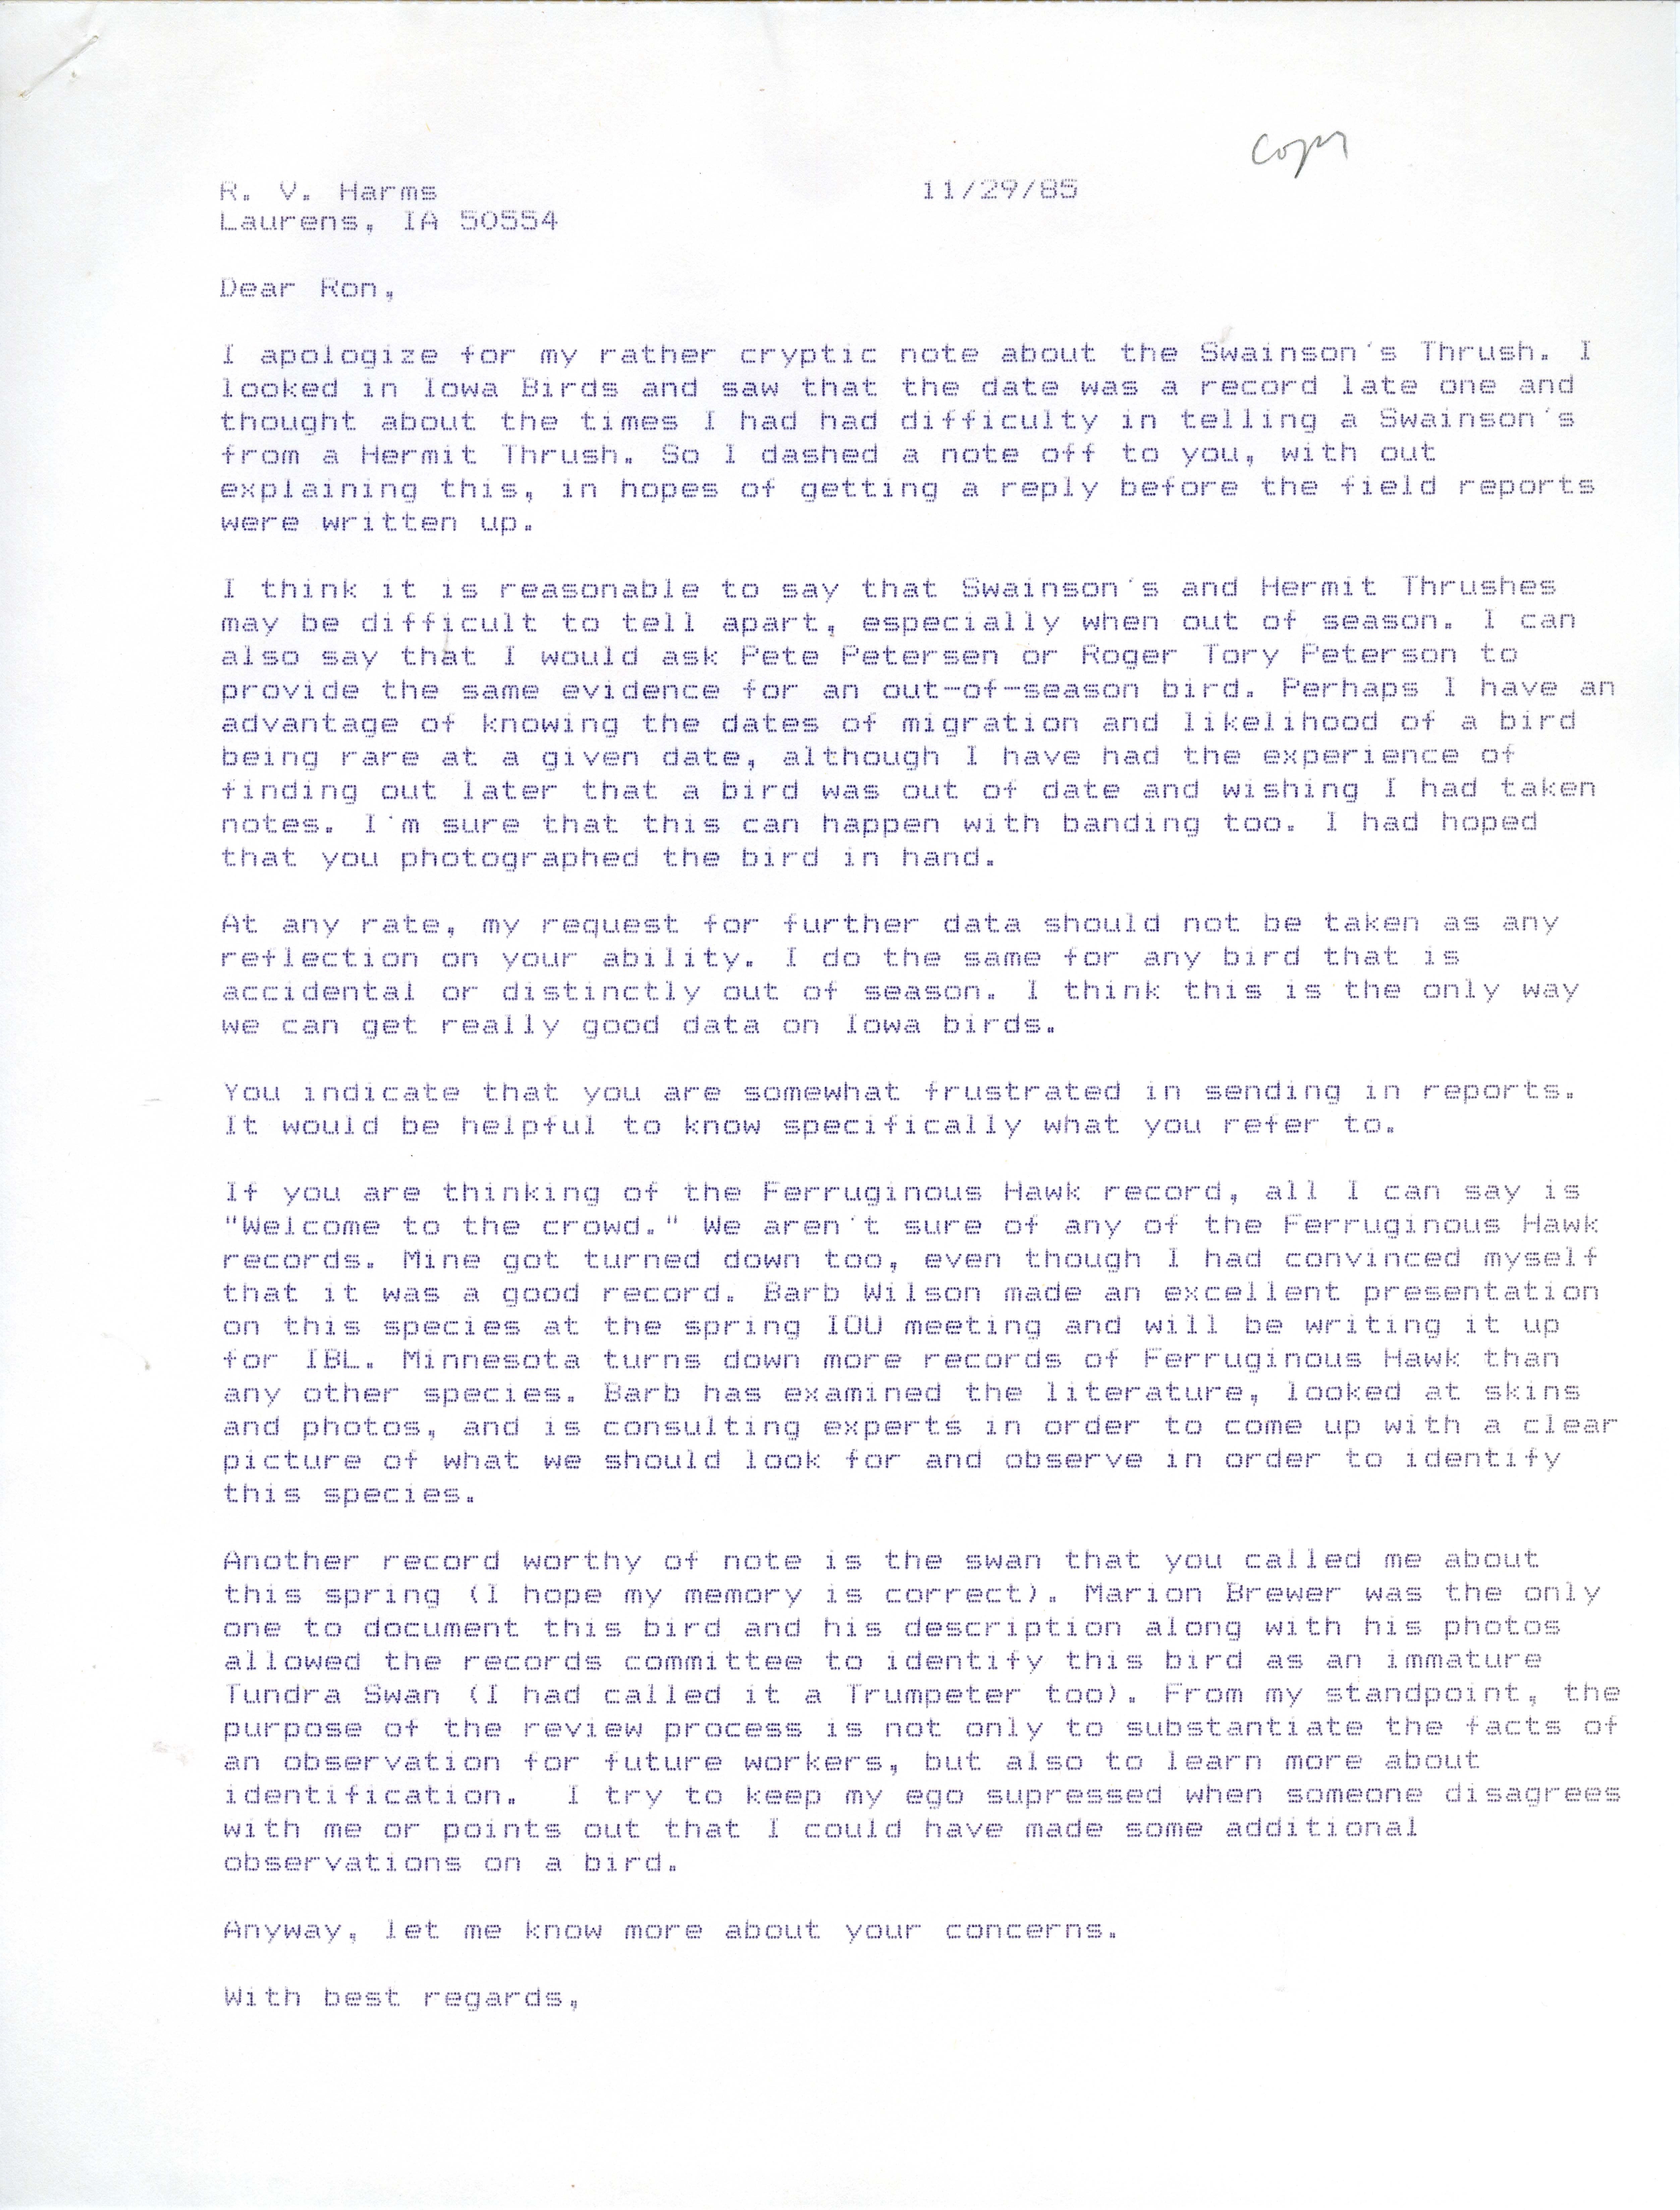 Thomas Kent letter to Ronald Harms regarding Swainson's Thrush, November 29, 1985